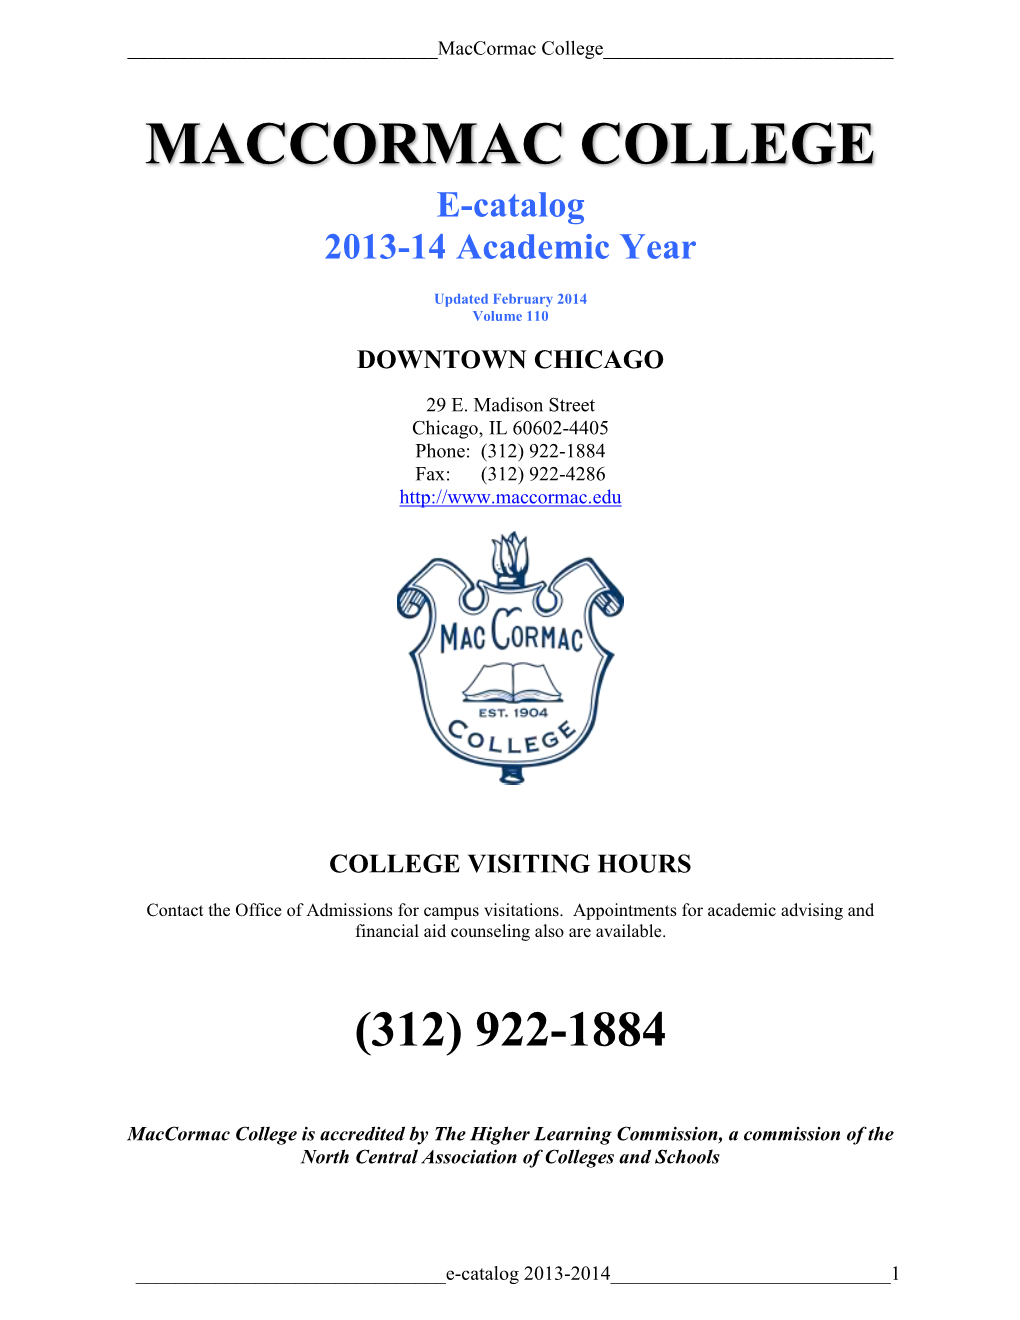 MACCORMAC COLLEGE E-Catalog 2013-14 Academic Year